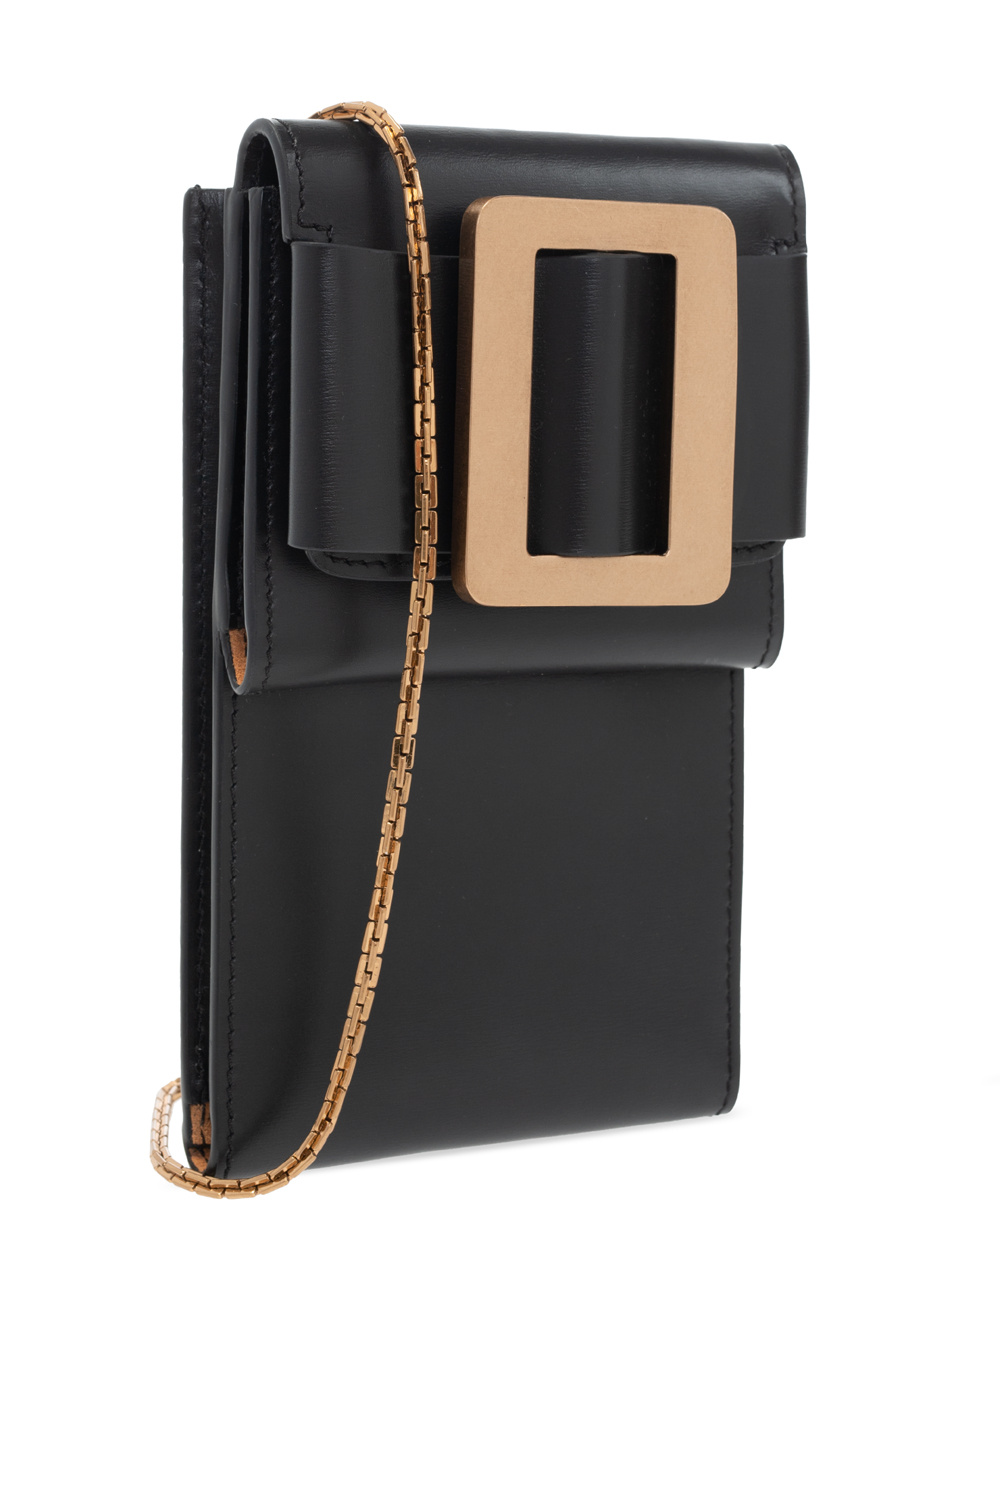 Boyy Buckle Panelled Leather Cross-body Phone Case, Orange, One Size